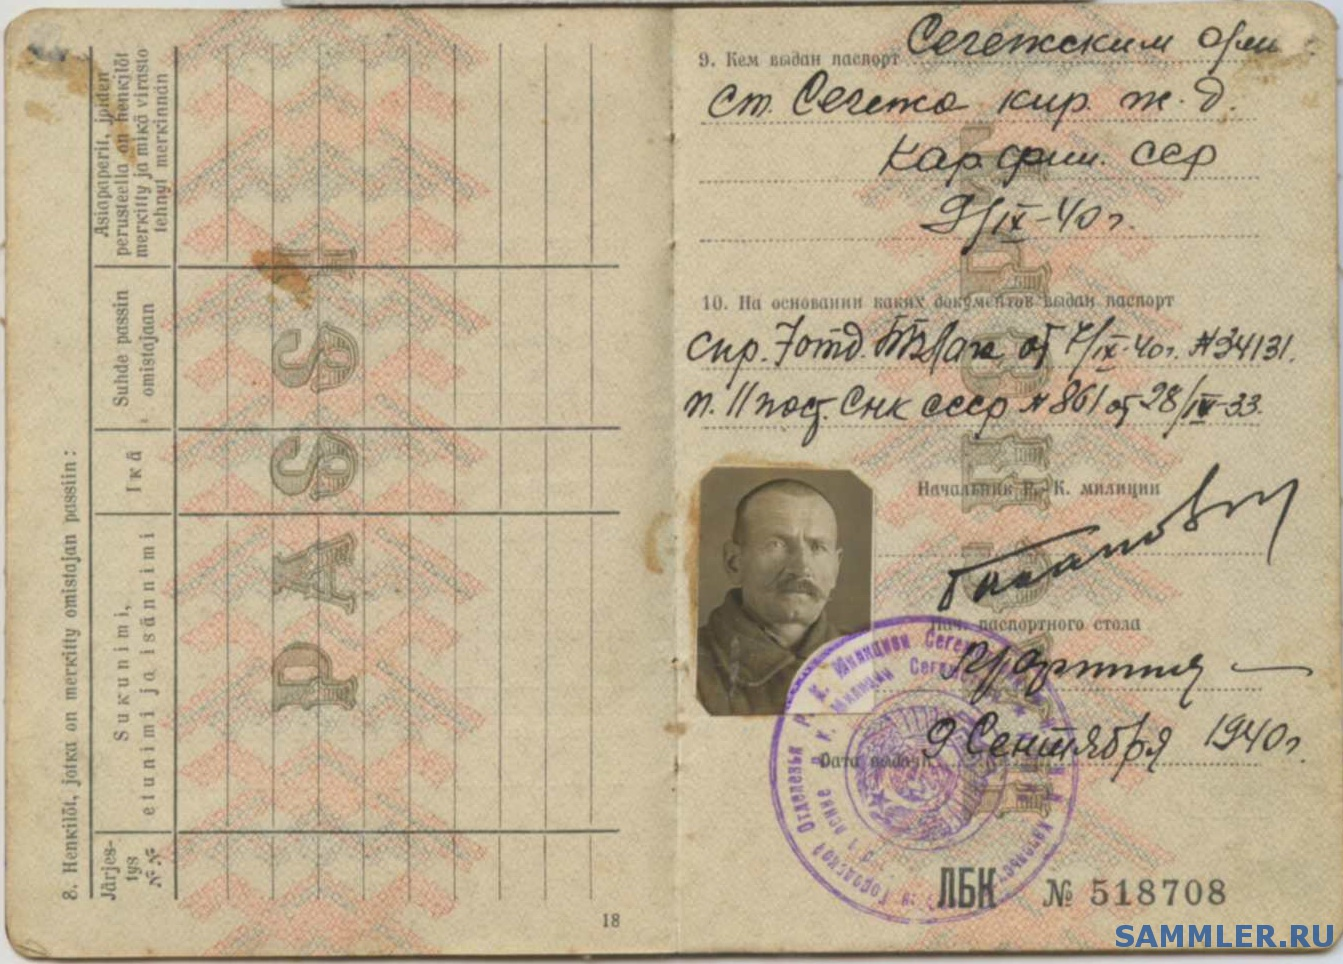 Образцы паспорта 1930-х годов.
Изображение с сайта: http://www.sammler.ru/uploads/monthly_03_2015/post-40468-0-98542100-1426398687_thumb.jpg